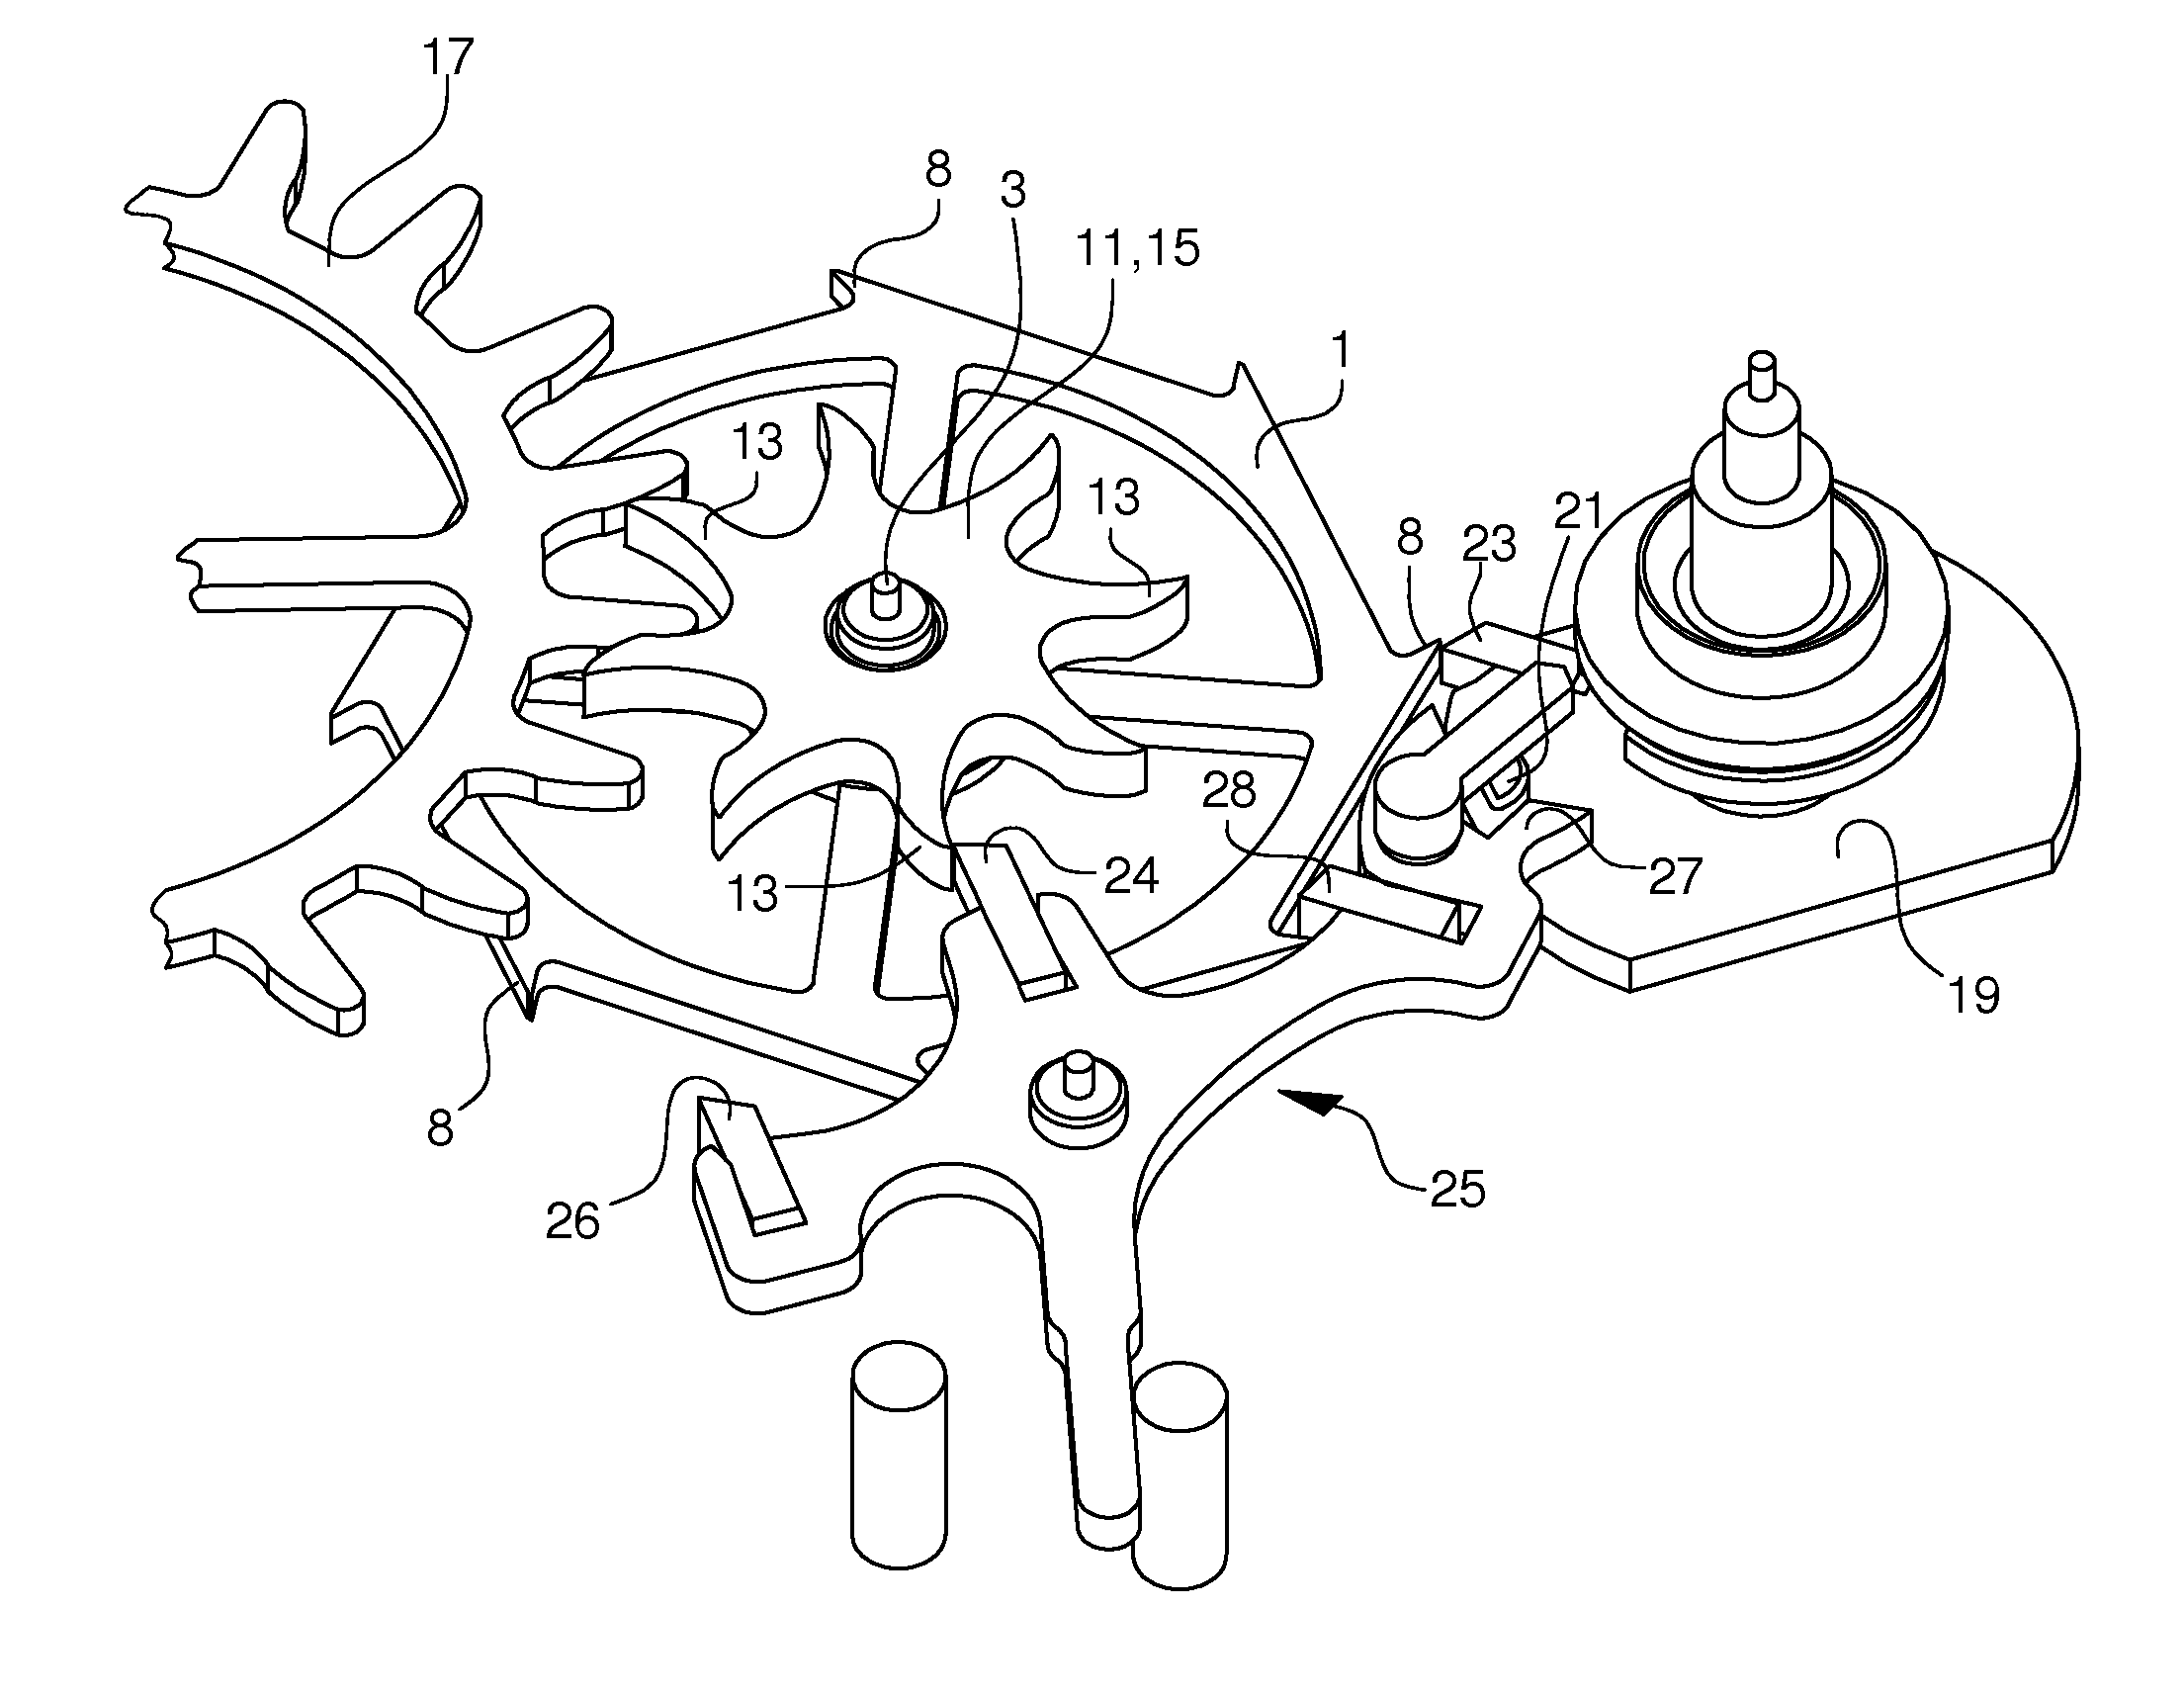 Single piece wheel set for a timepiece